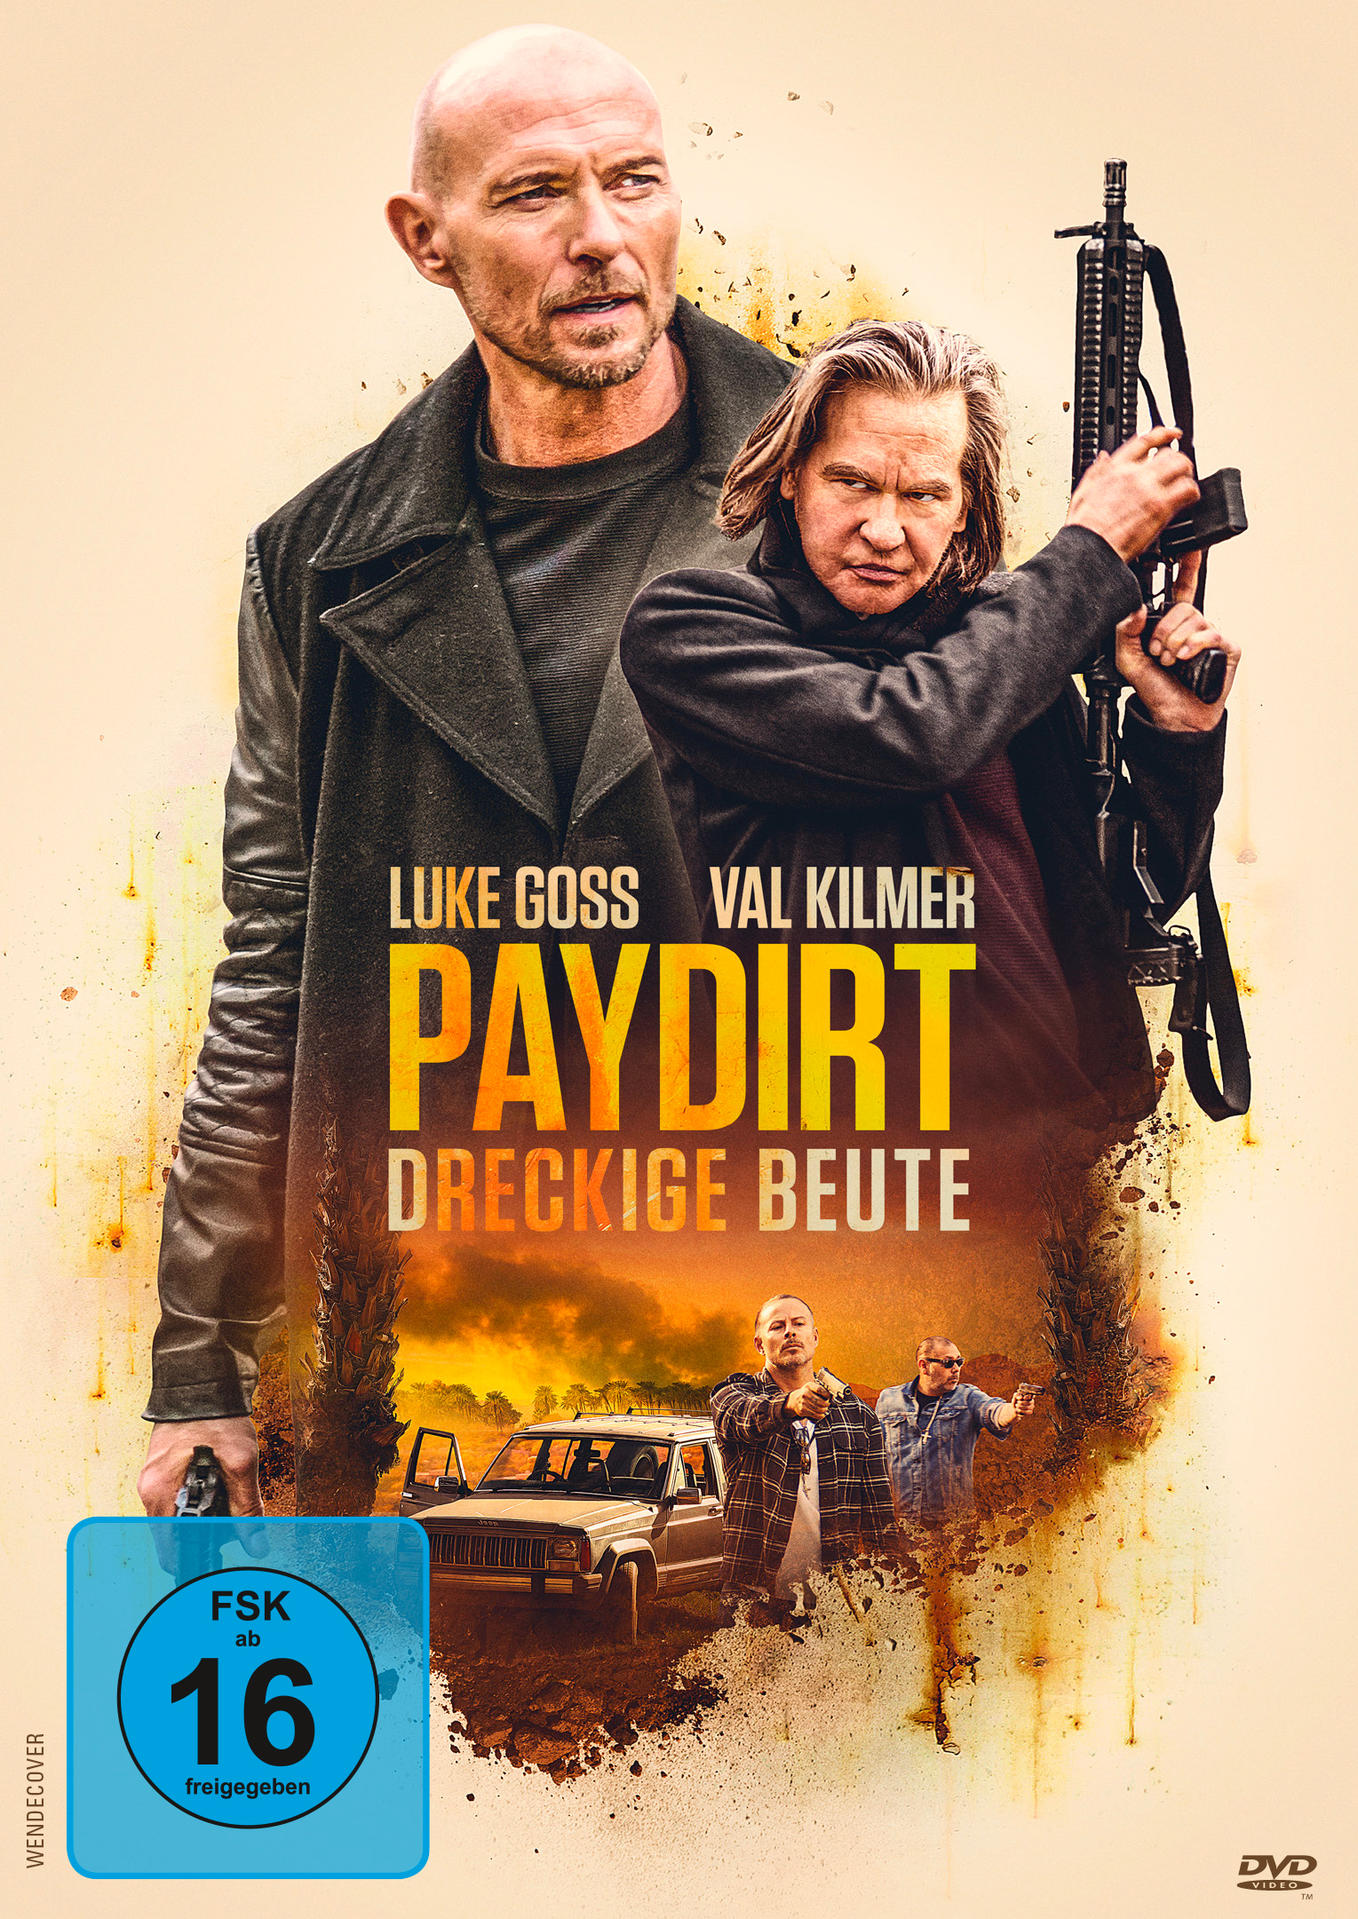 Paydirt - Dreckige Beute DVD